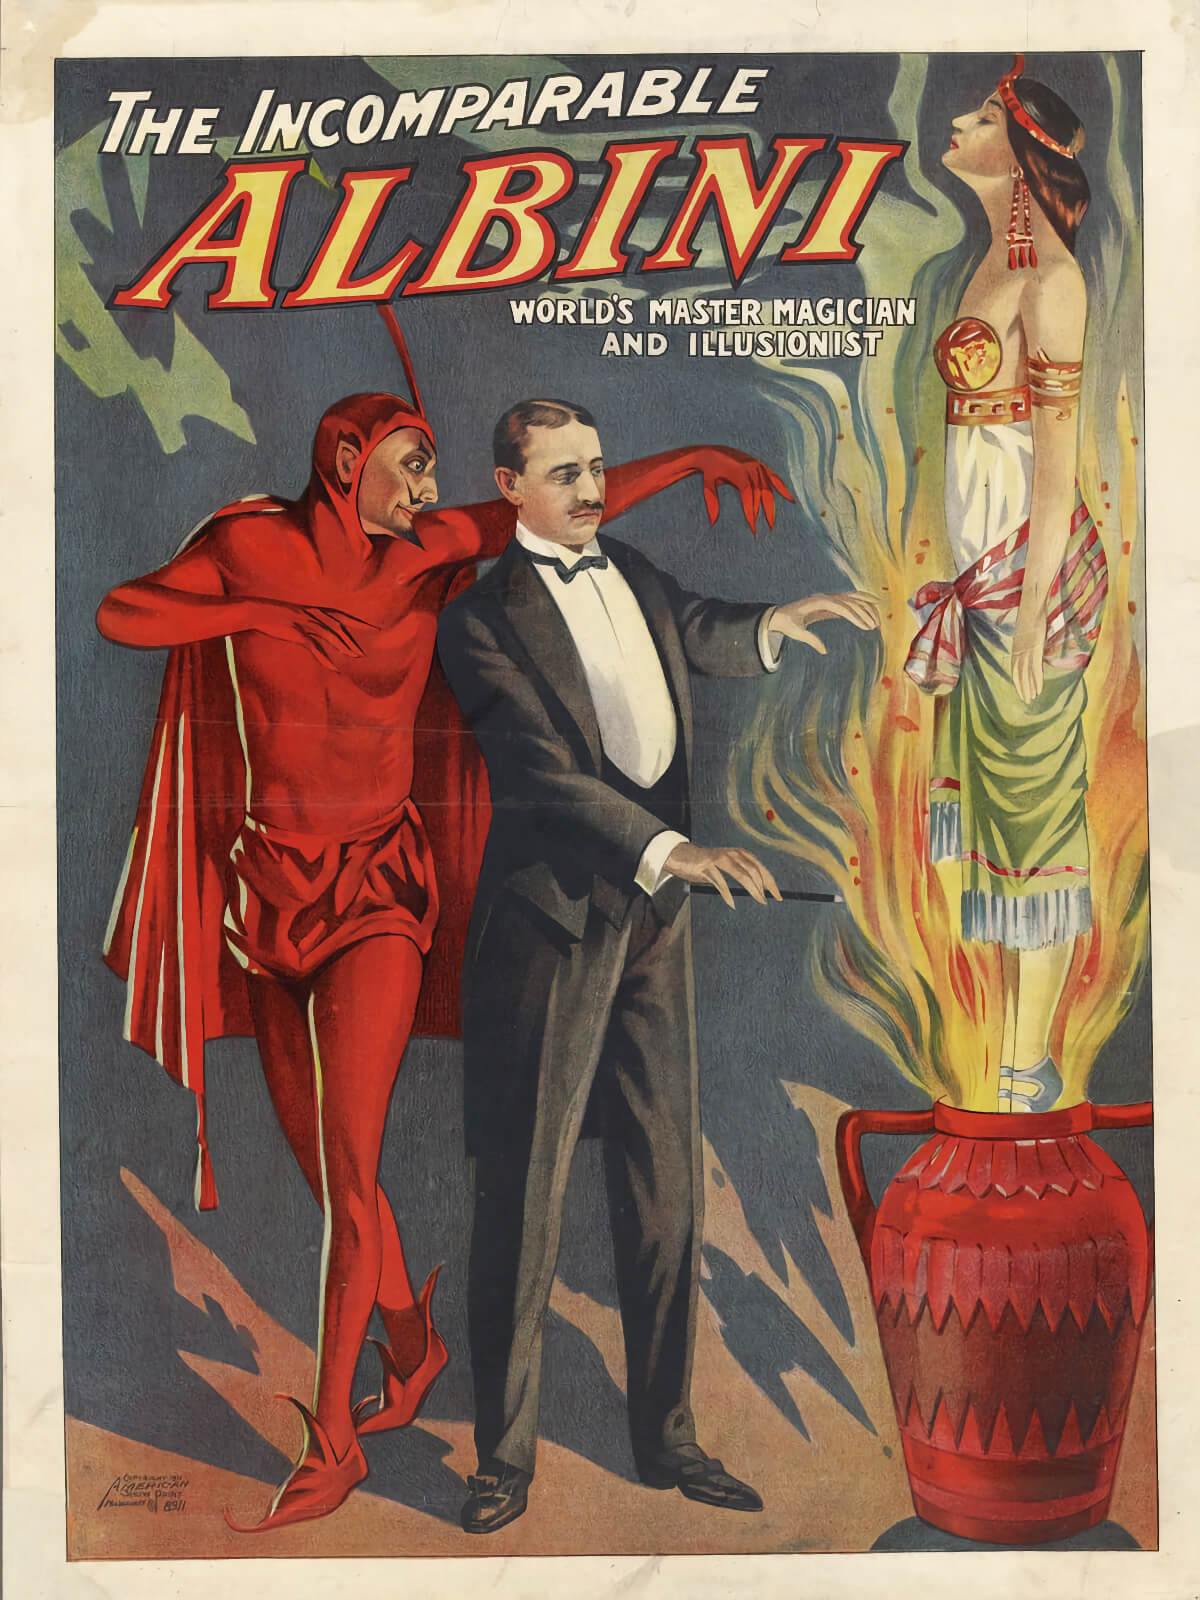 Albini the Magician Poster, 1911